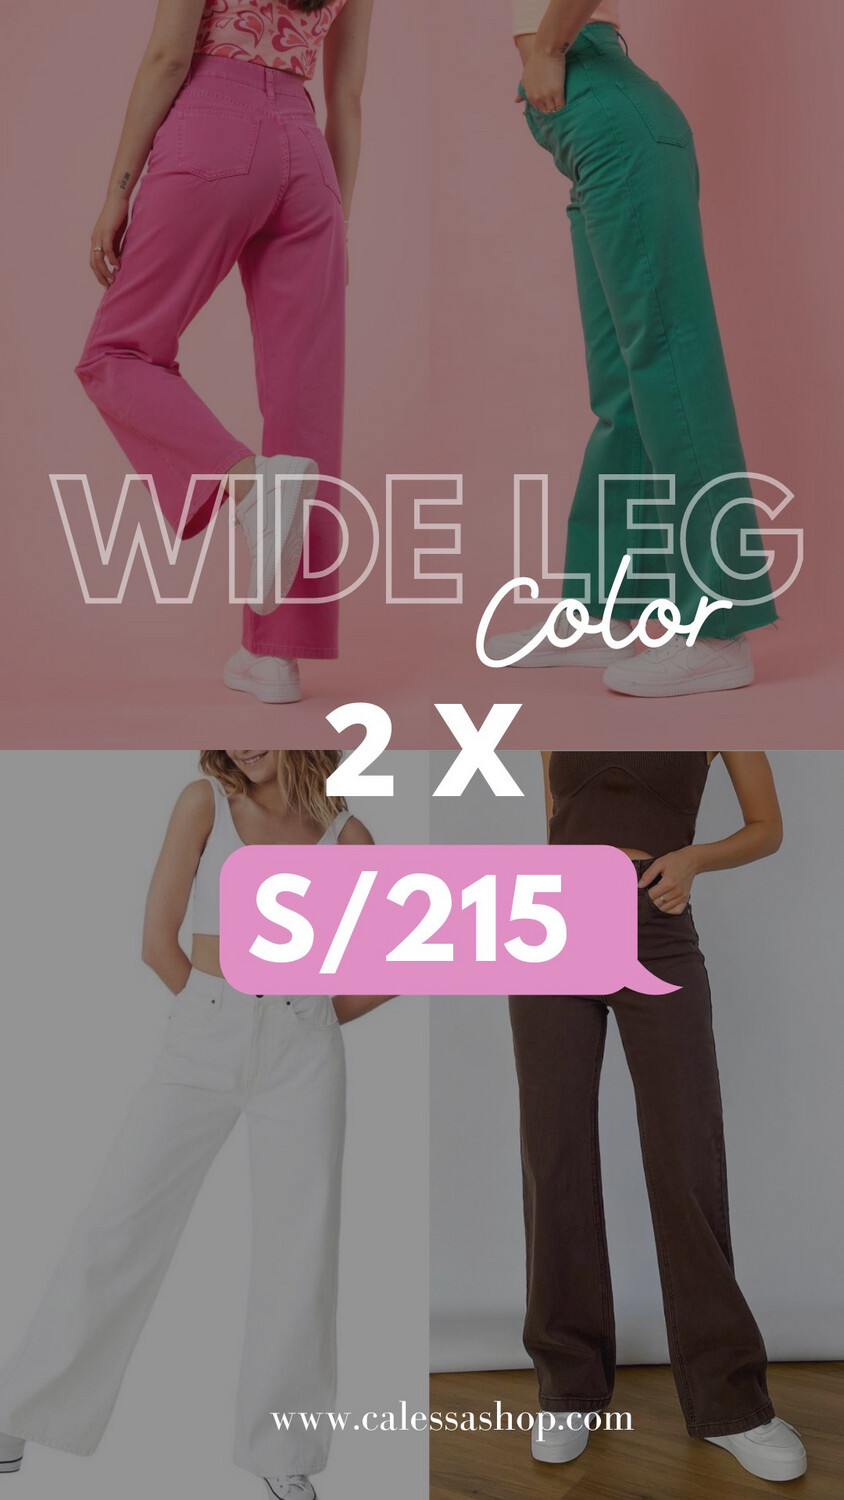 Pack 5: Wide Leg Color x 2